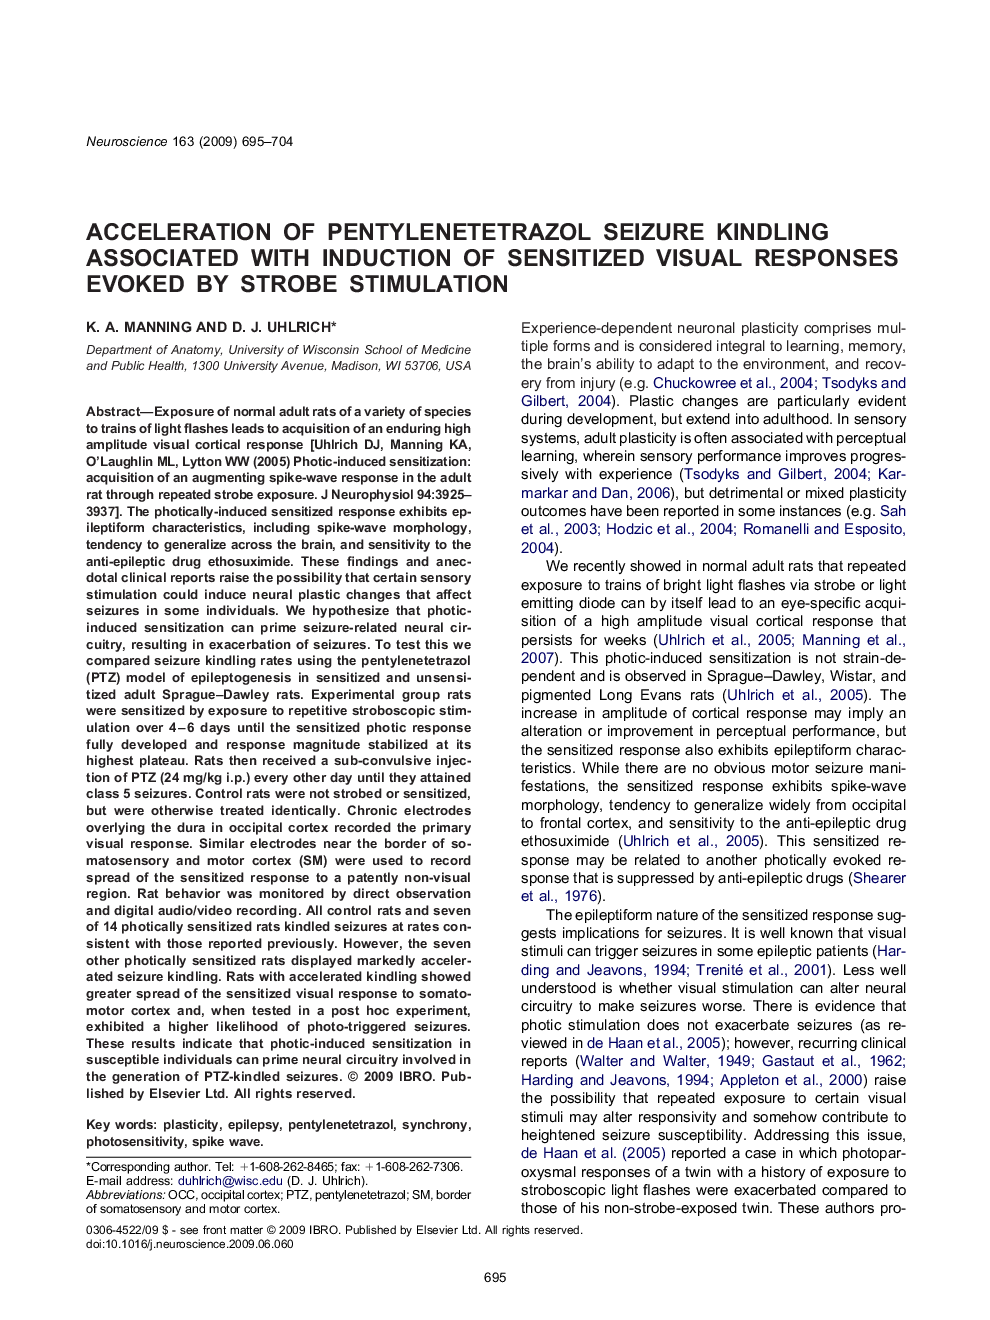 Acceleration of pentylenetetrazol seizure kindling associated with induction of sensitized visual responses evoked by strobe stimulation